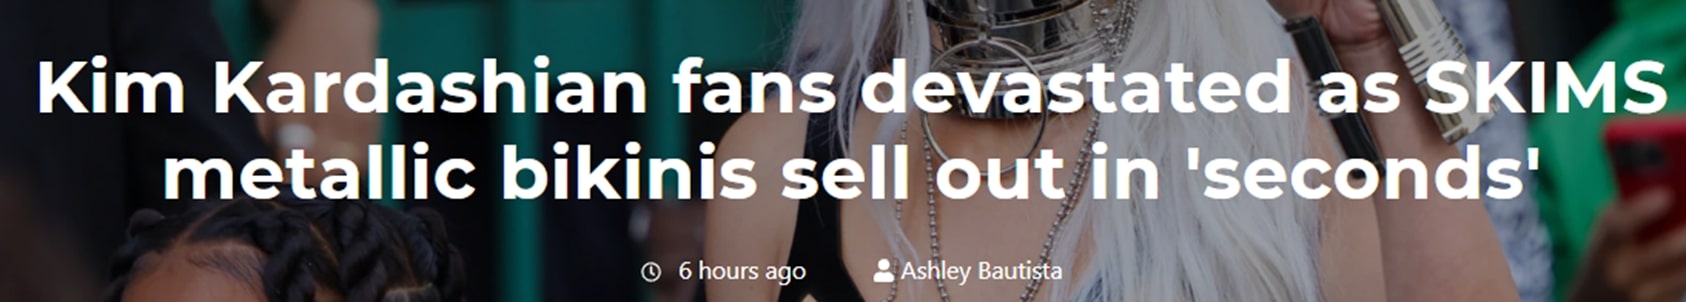 Headline: Kim Kardashian fans devastated as SKIMS metallic bikinis sell out in 'seconds'